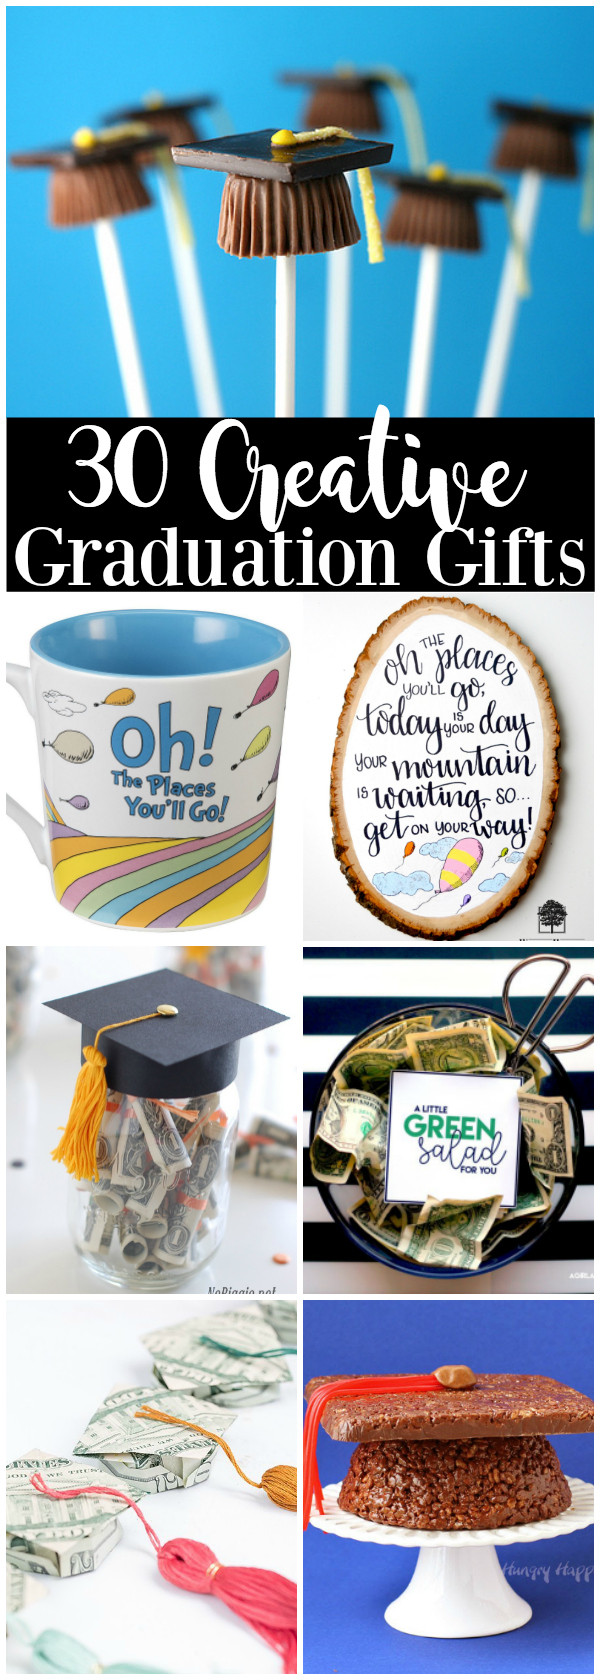 Ideas For Graduation Gift
 30 Creative Graduation Gift Ideas